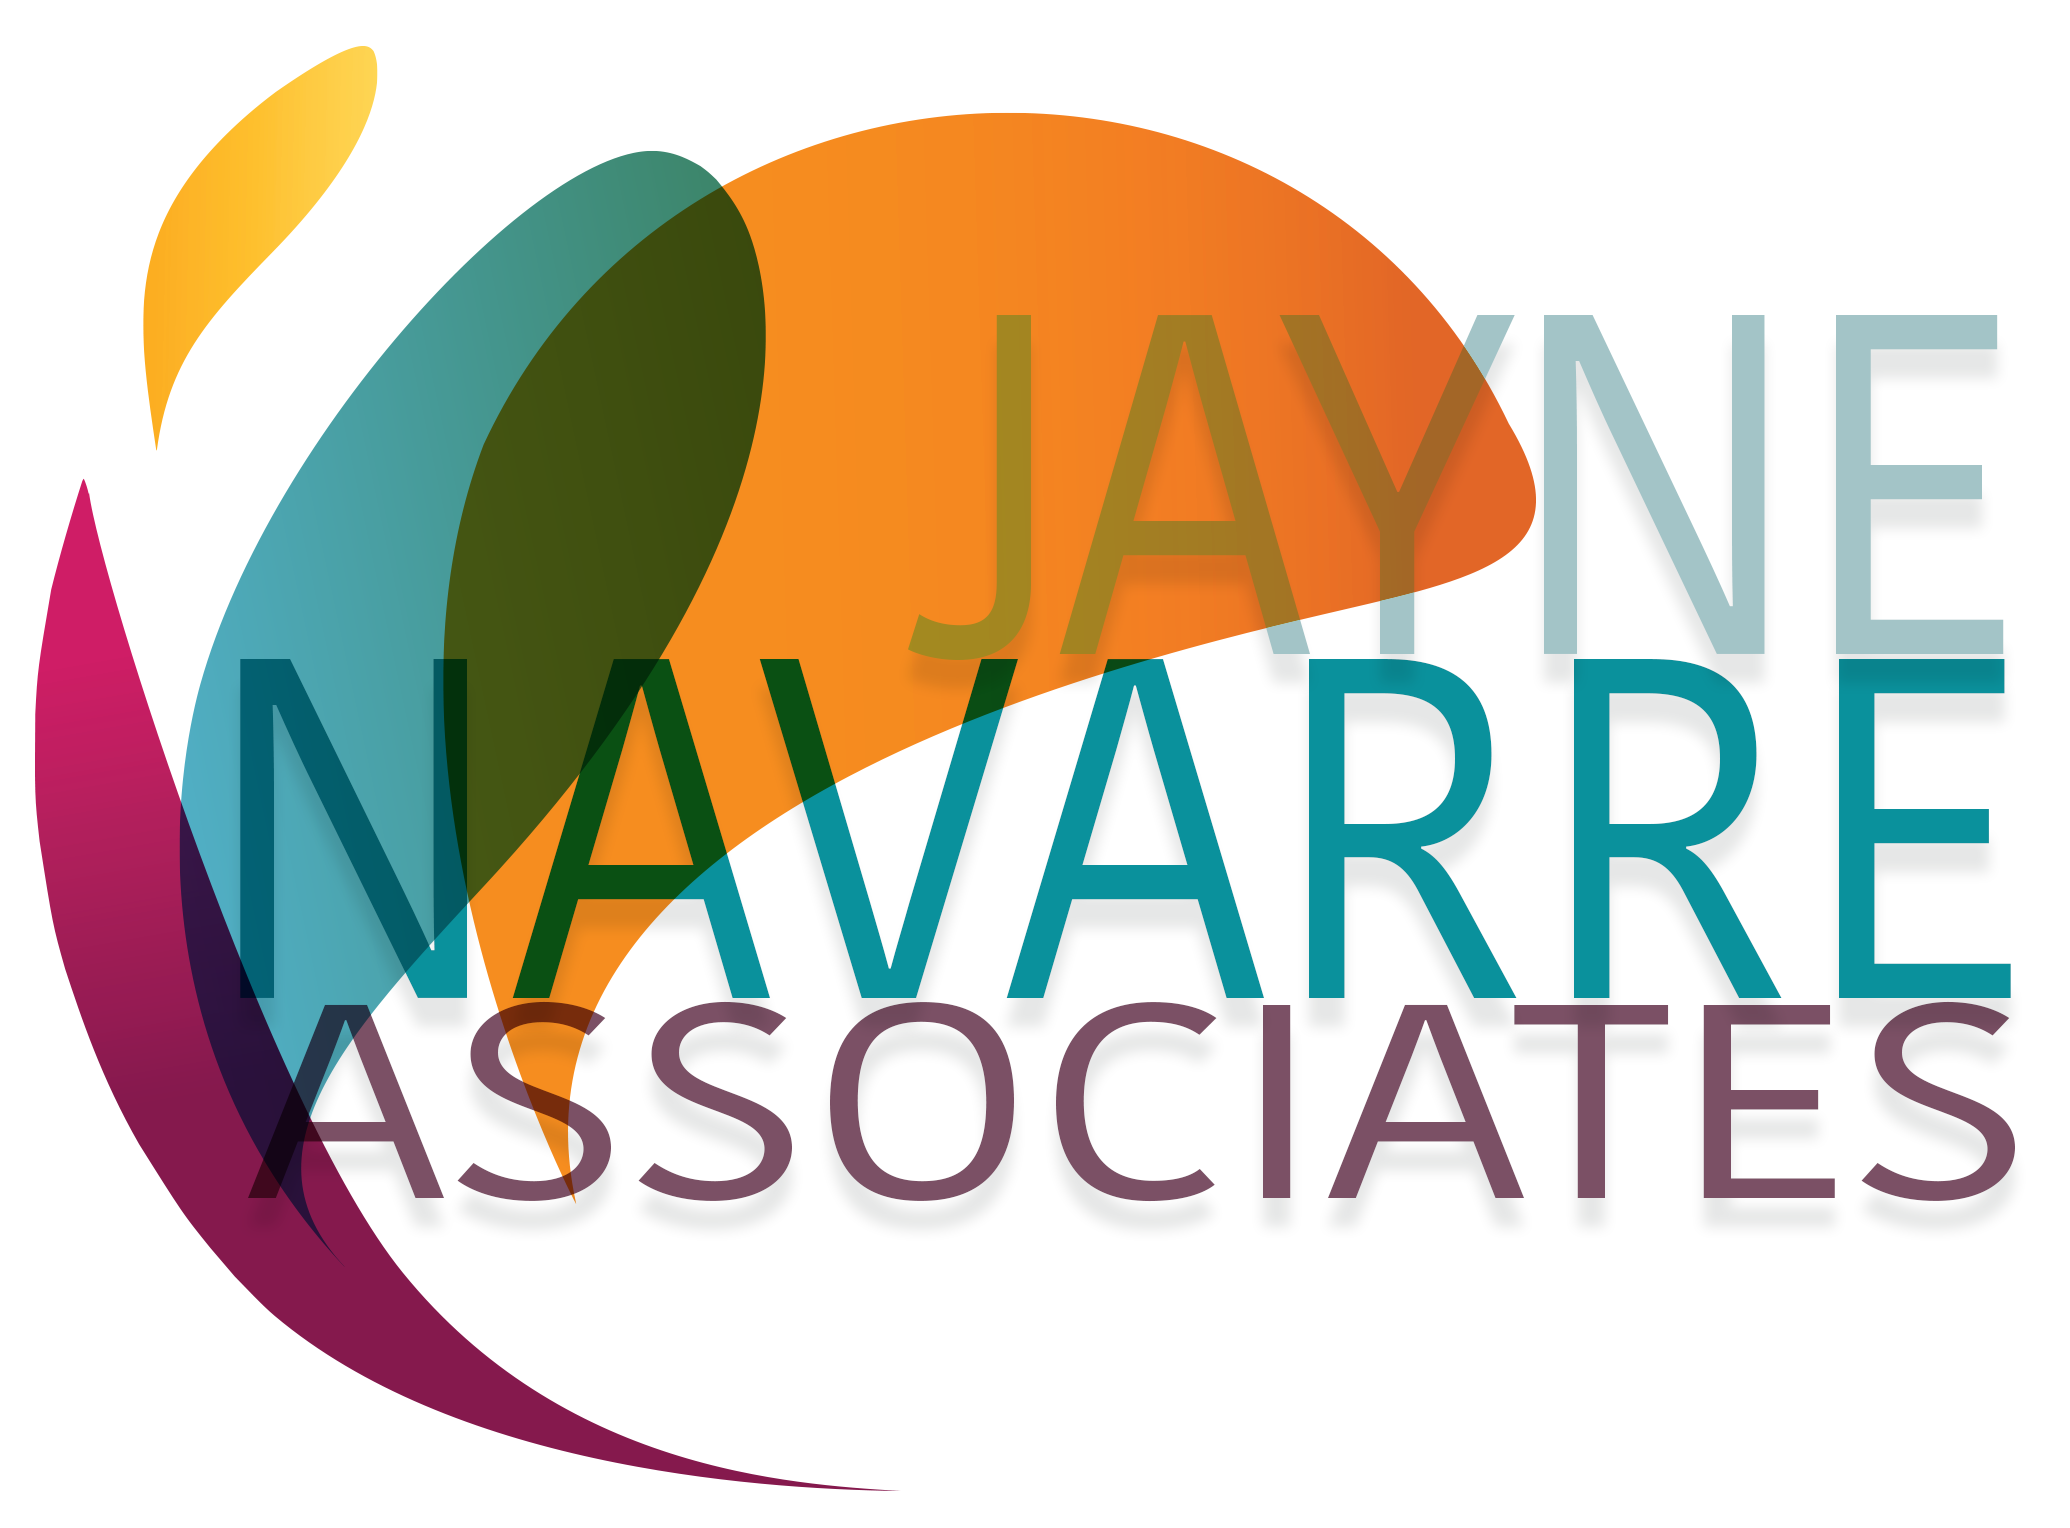 Jayne Navarre Associates